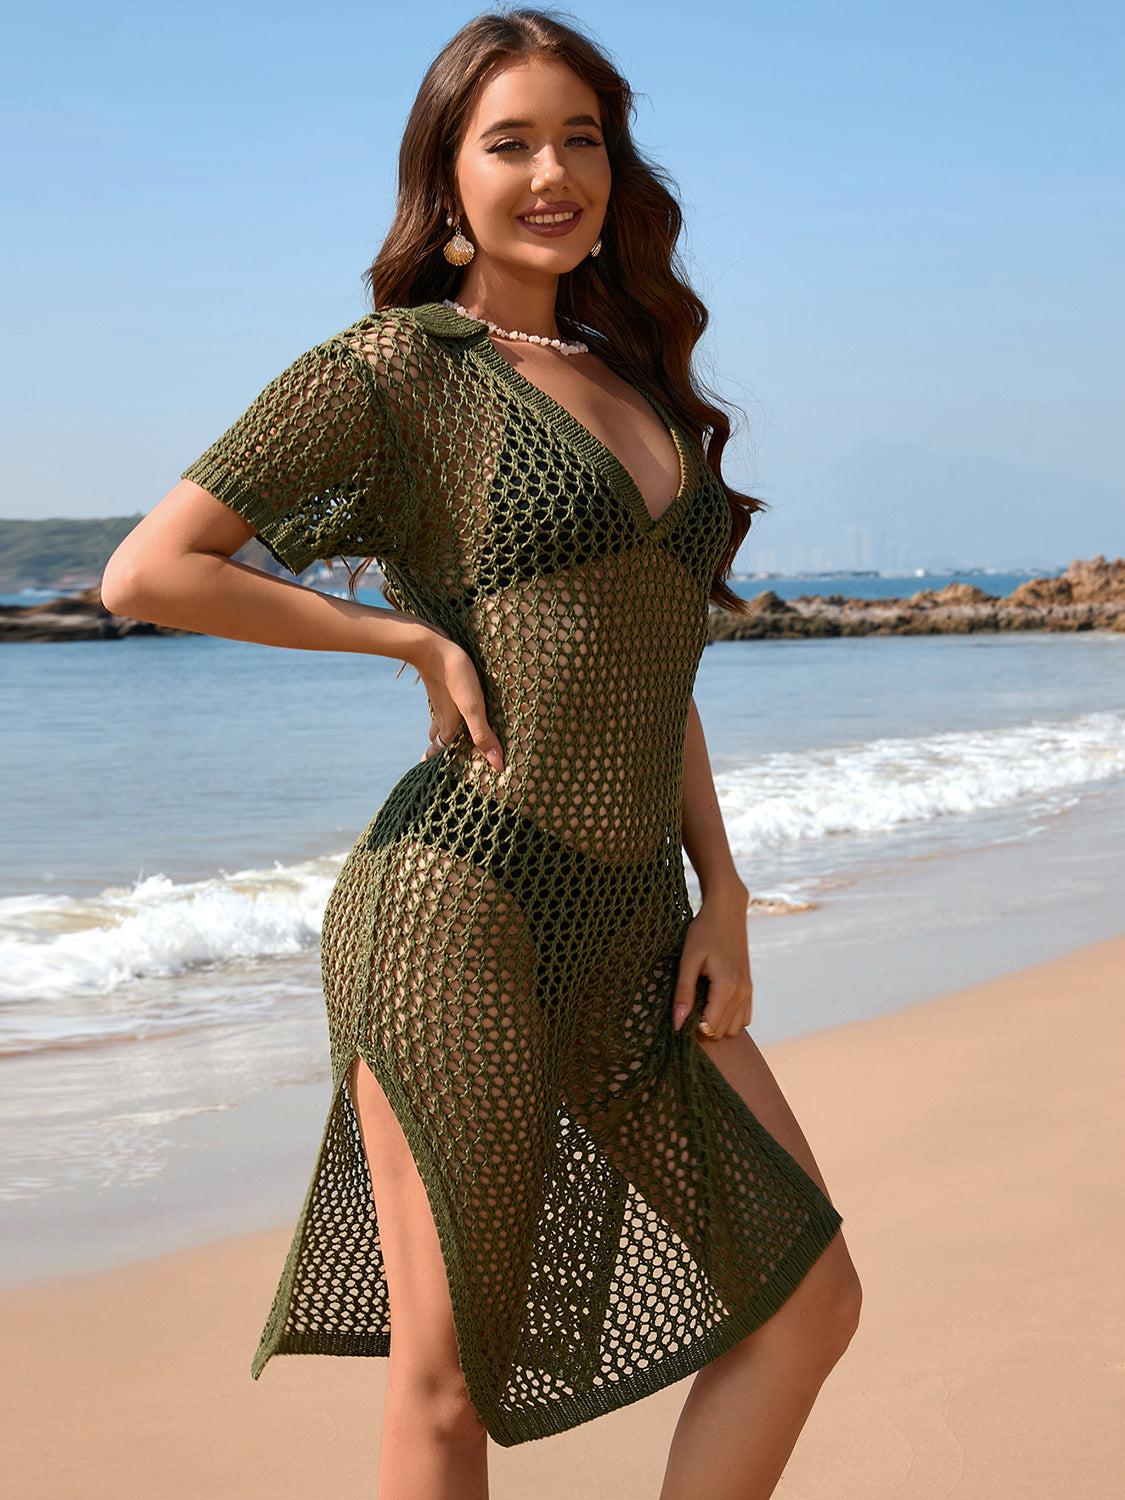 a woman posing on the beach in a green crochet dress